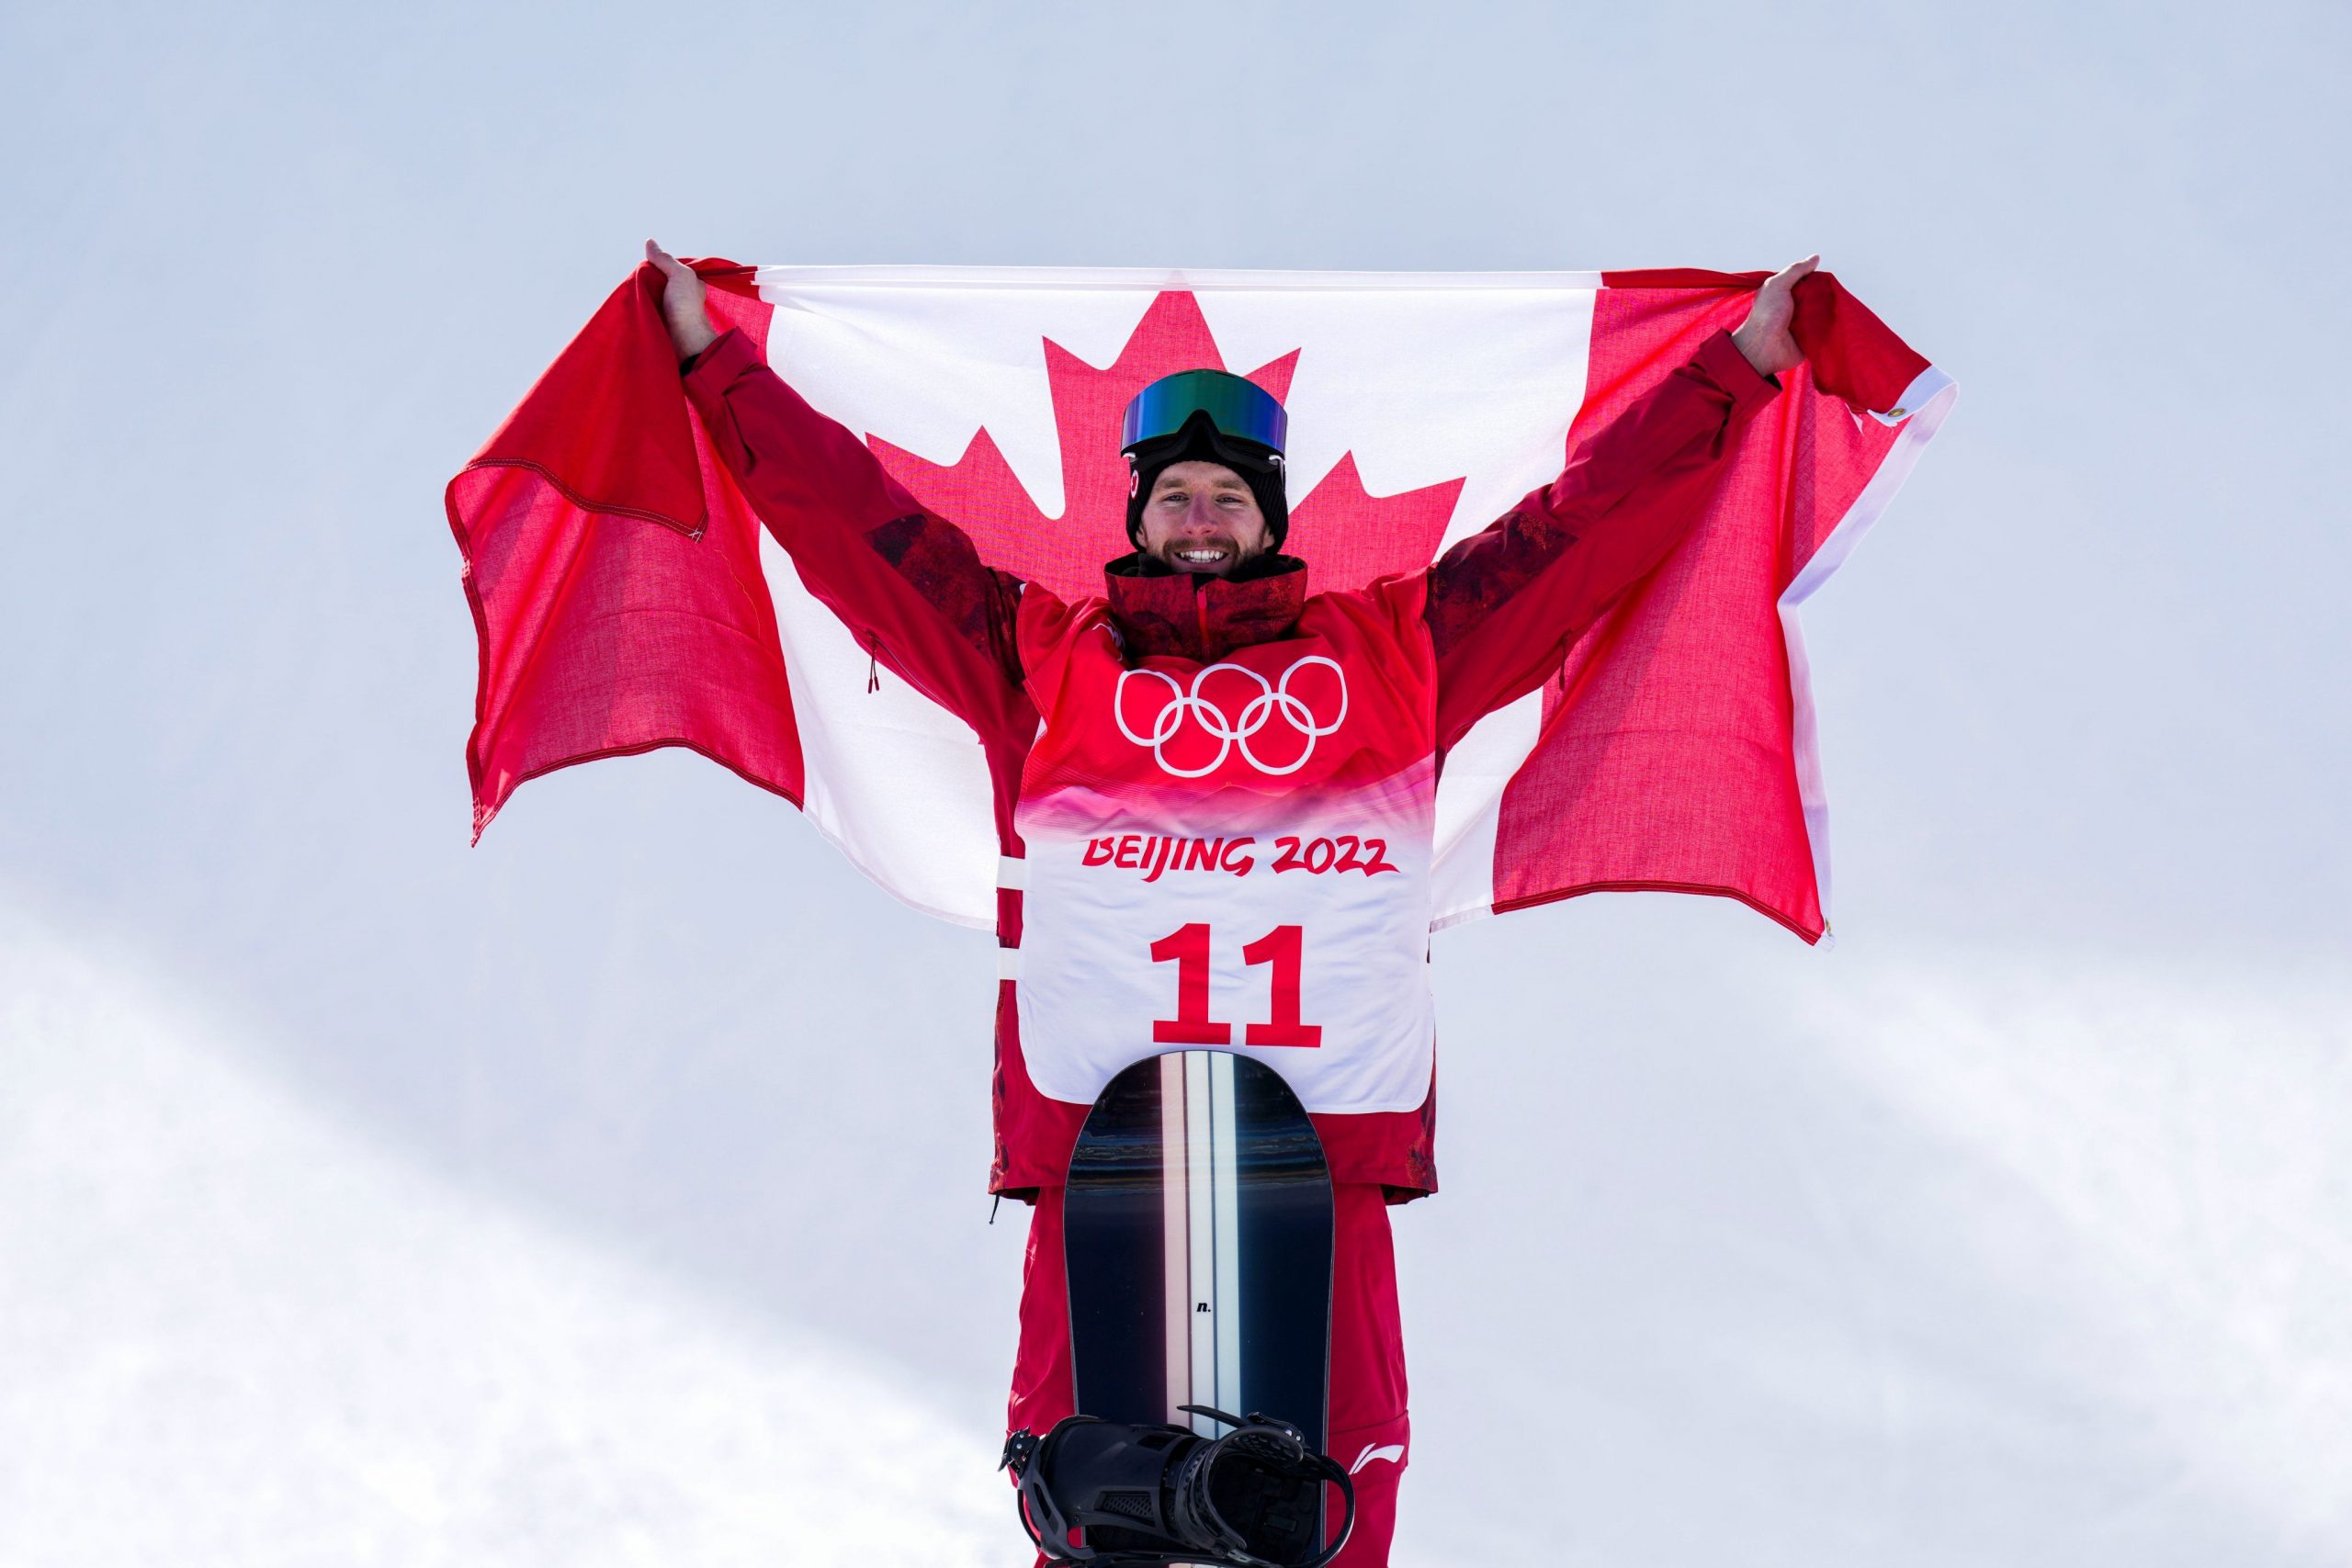 Winter Olympics: Cancer survivor Max Parrot wins mens snowboard gold